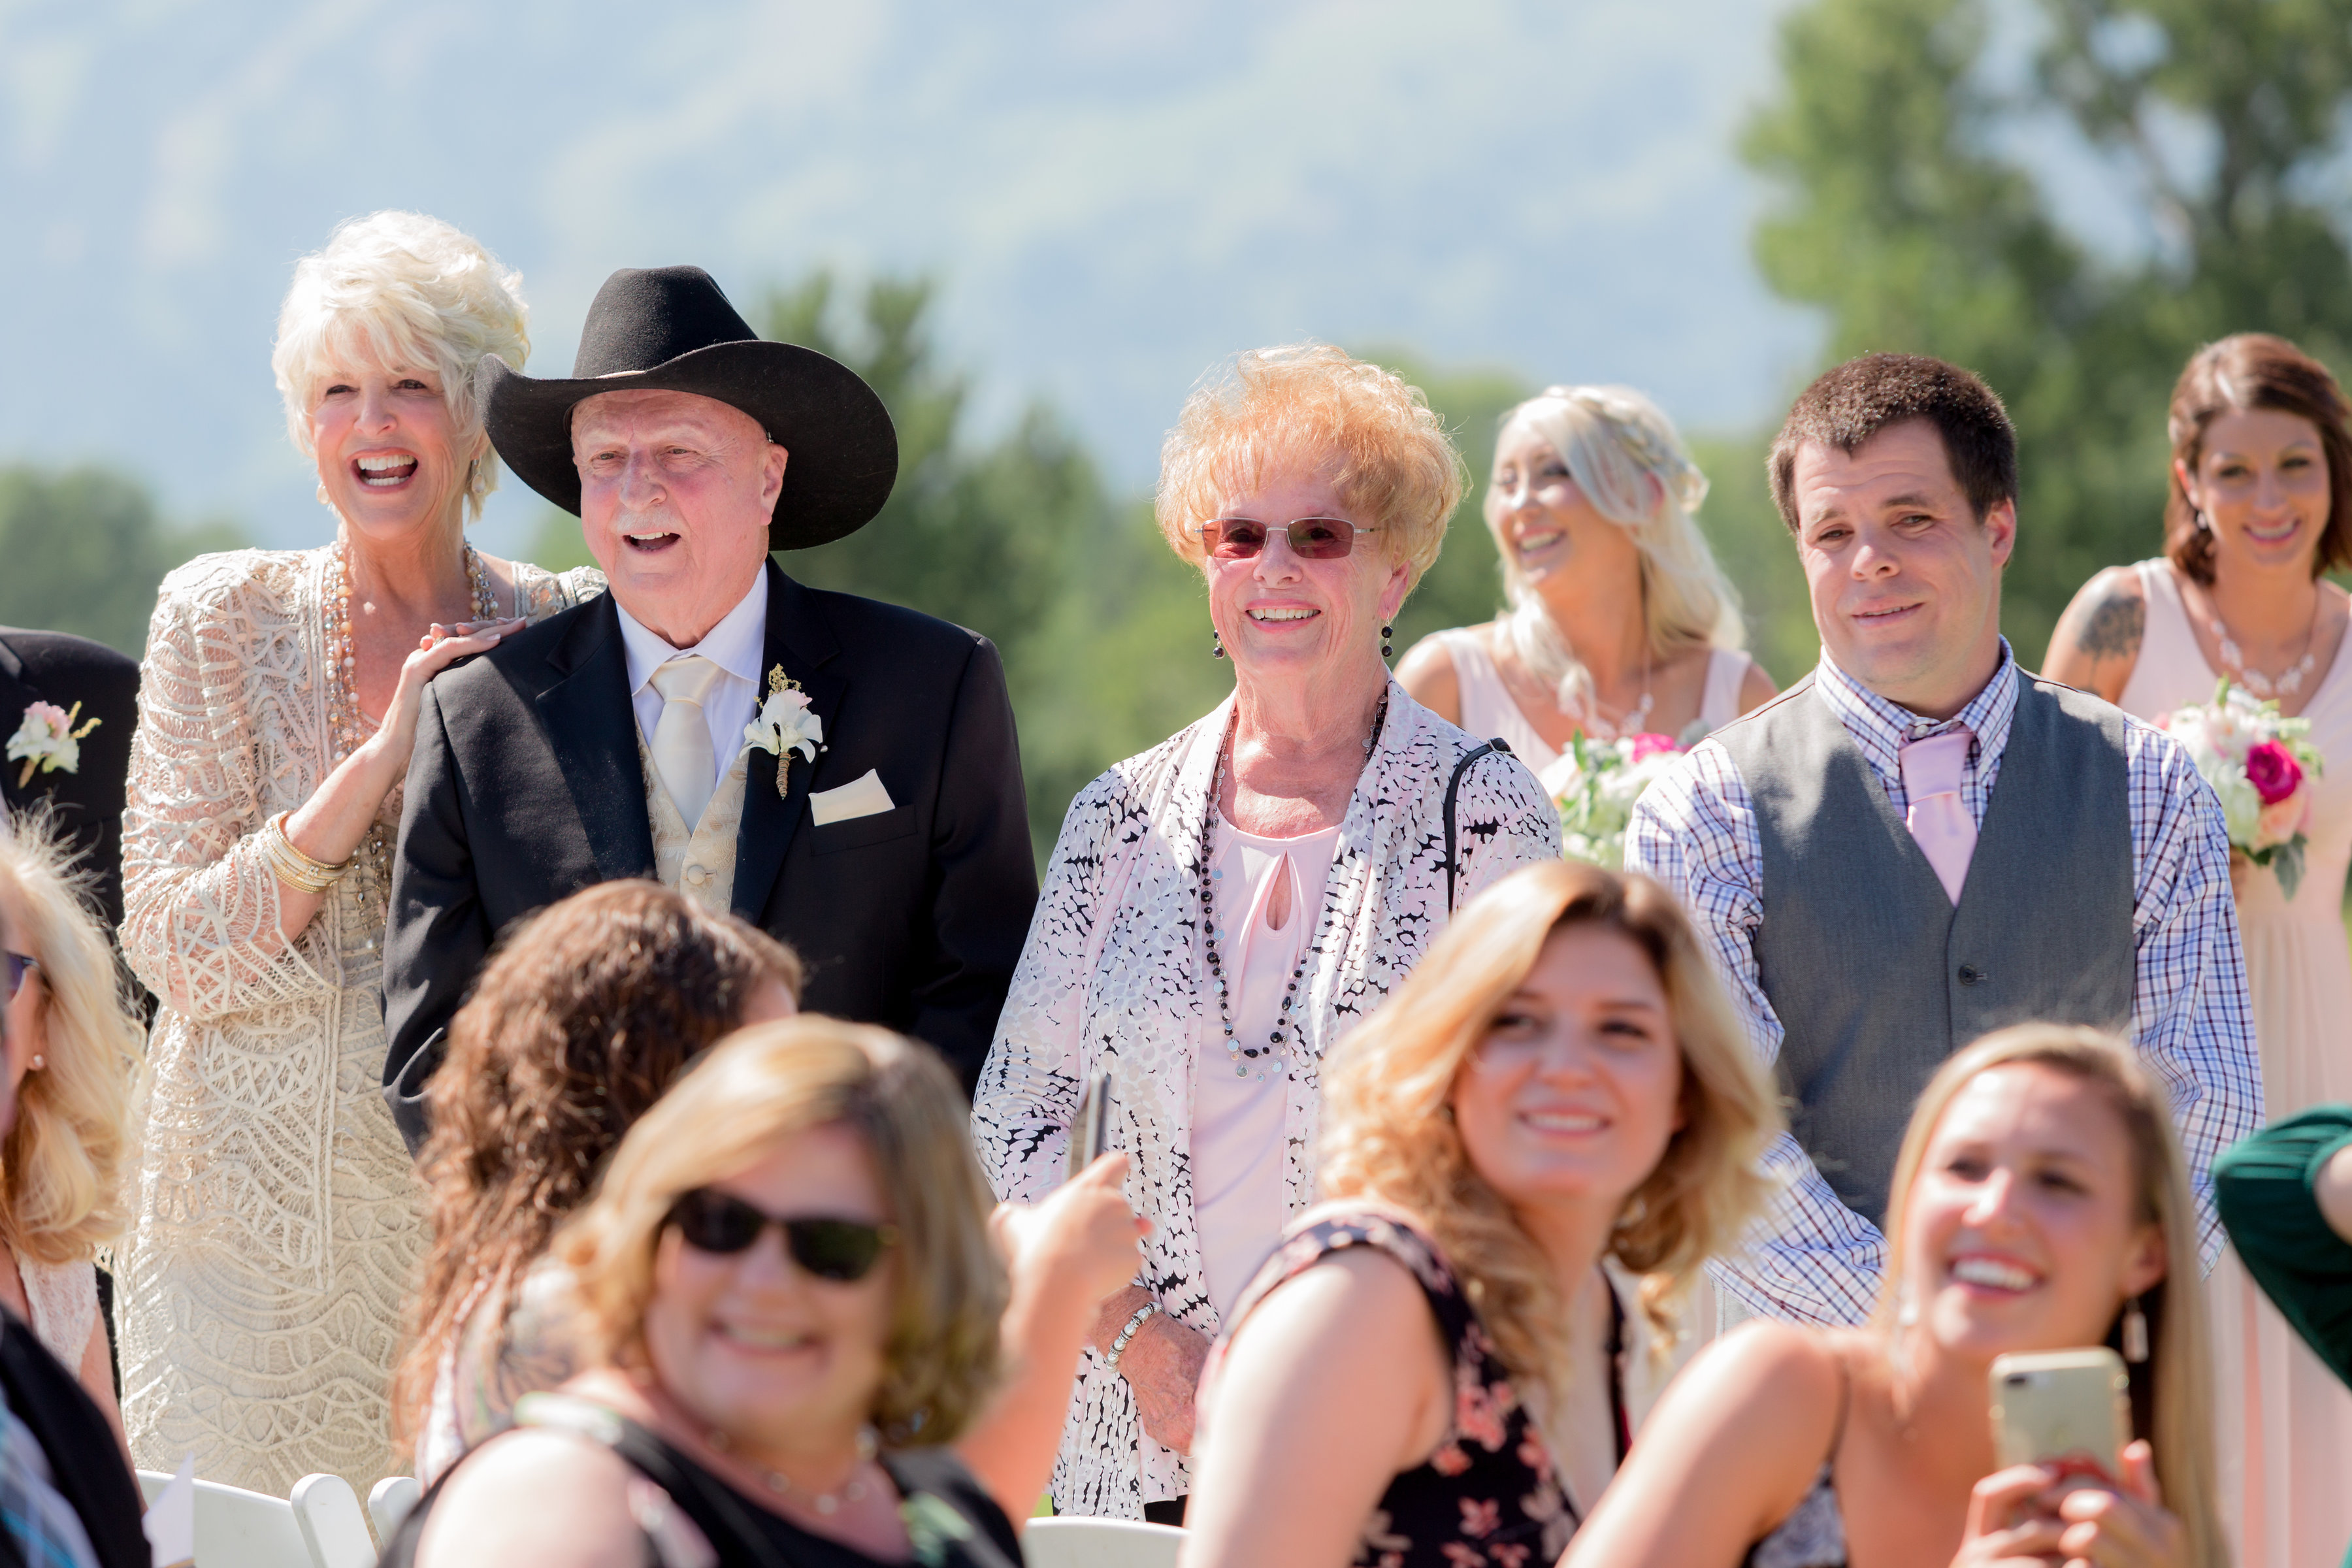 Wyoming wedding guests